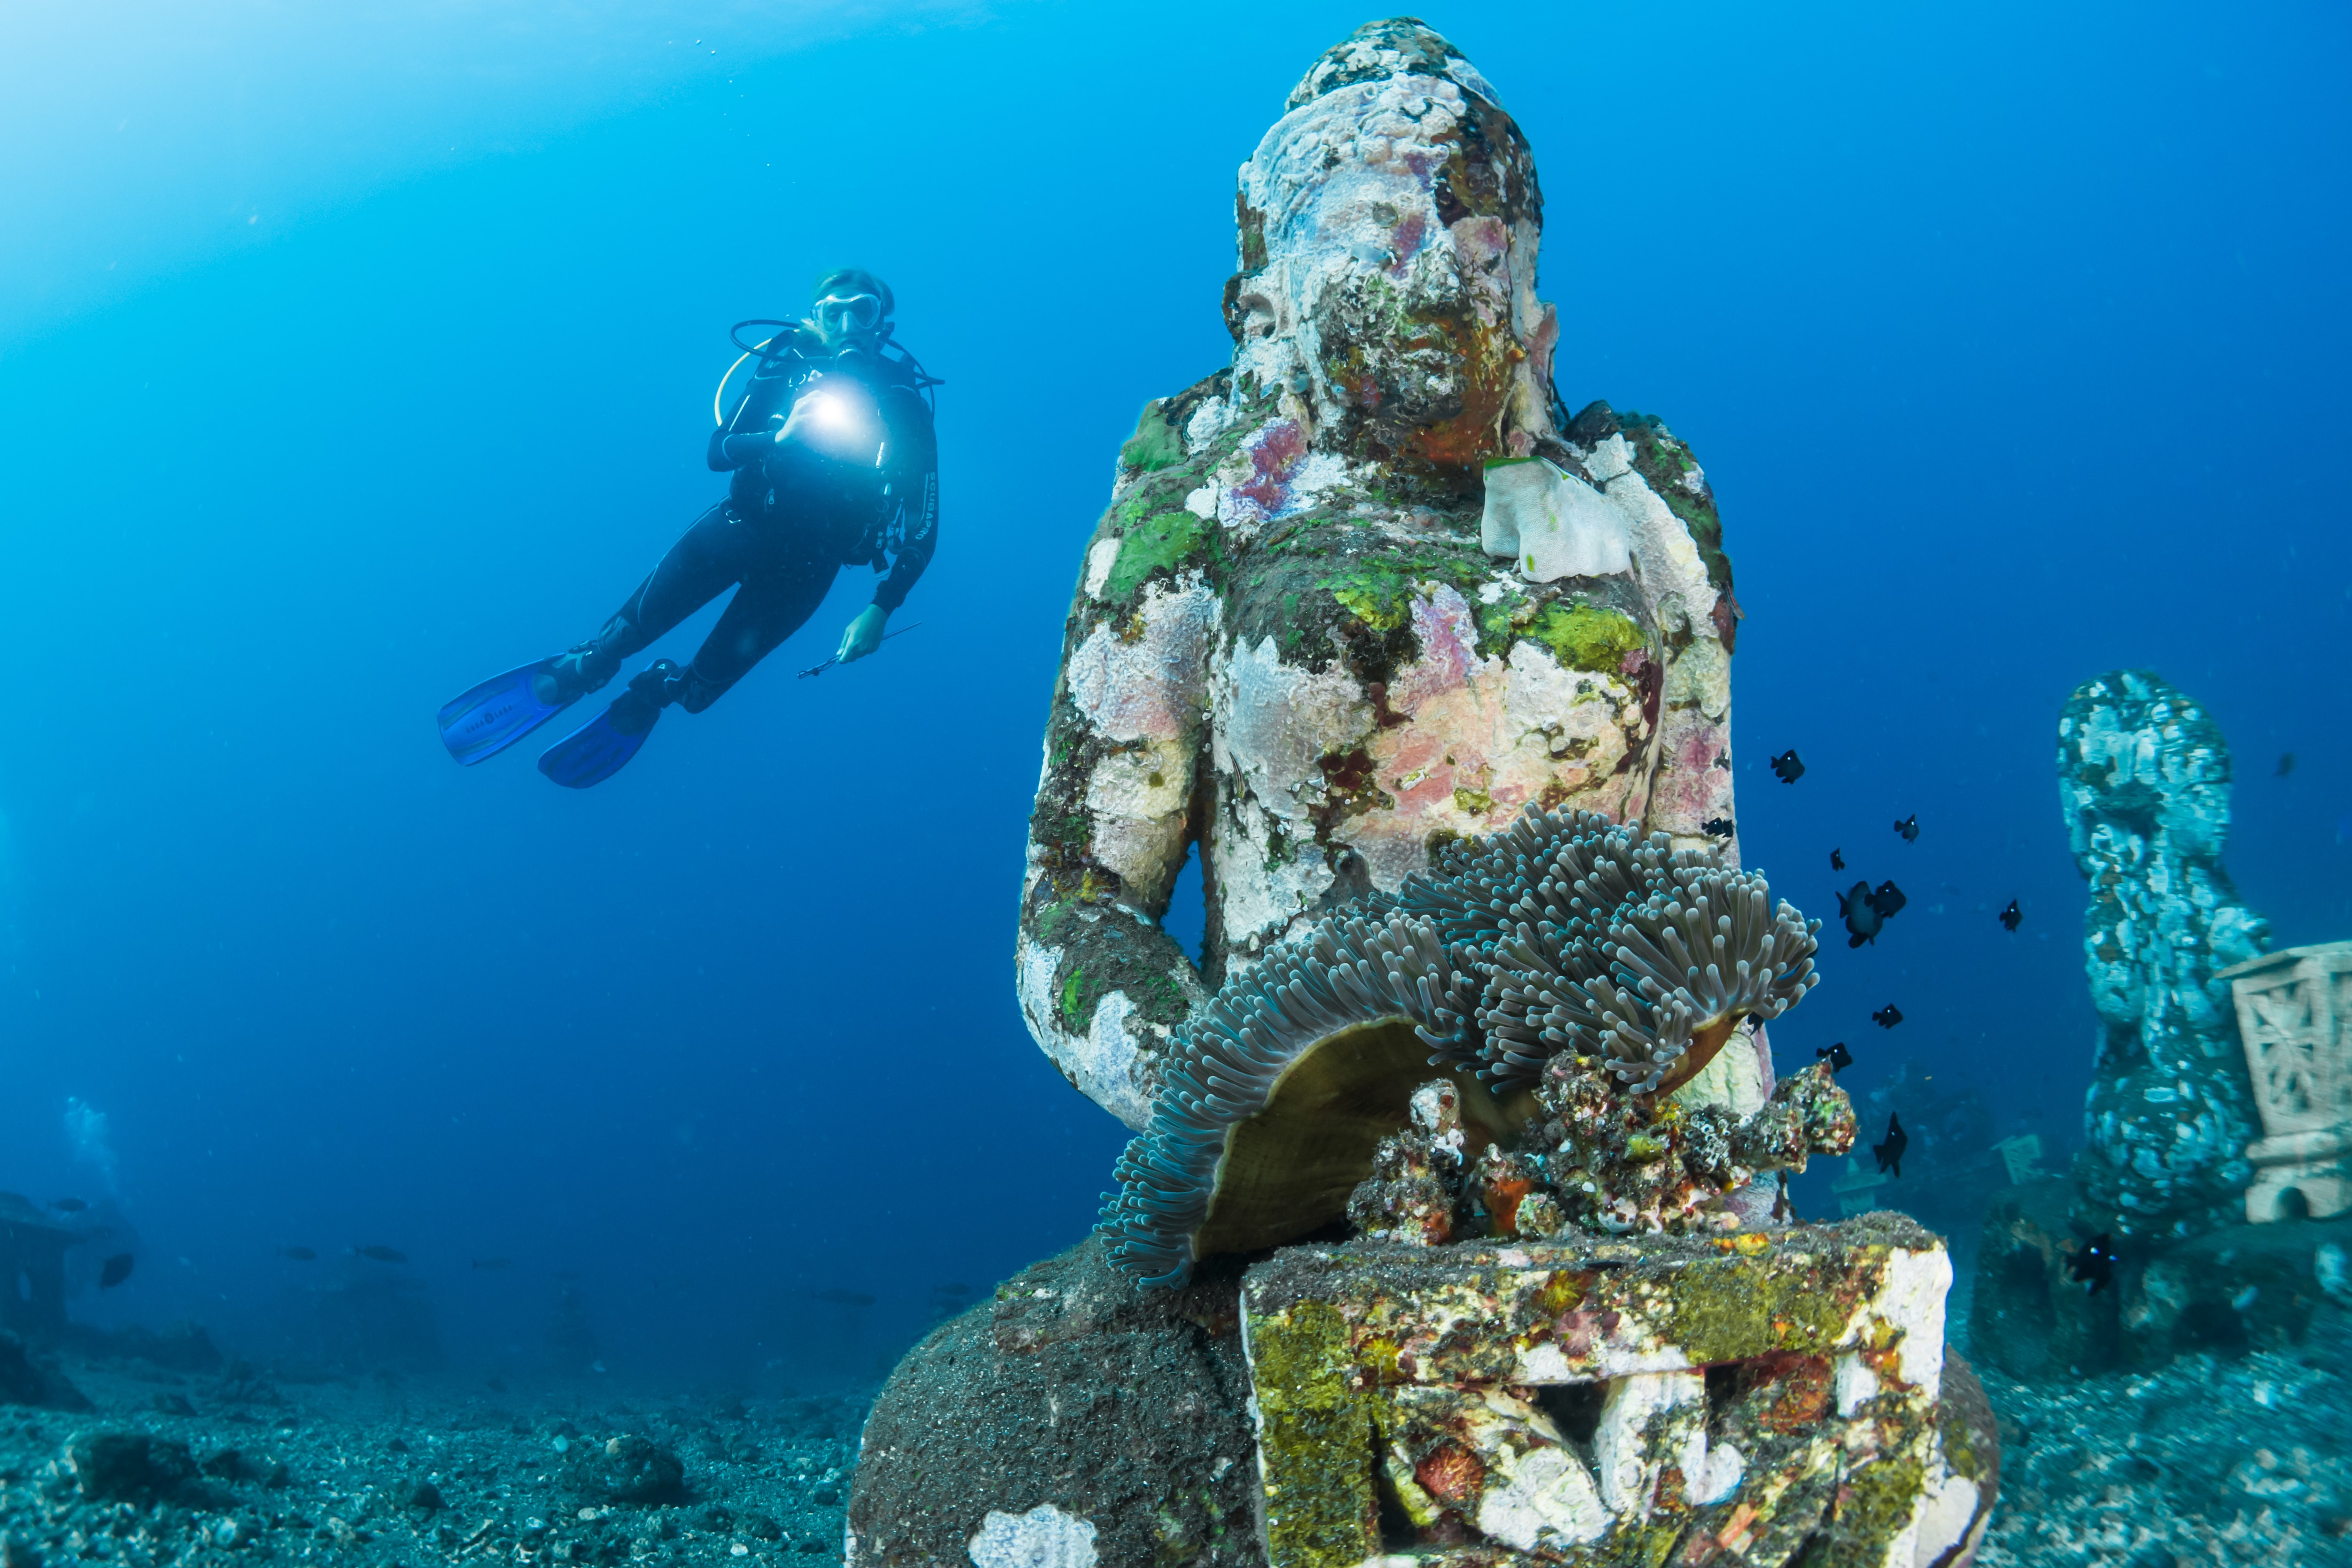 Diver Diving On Ocean Floor Near Statue Photo. Photo by : Sebastian Pena Lambarri (unsplash.com)